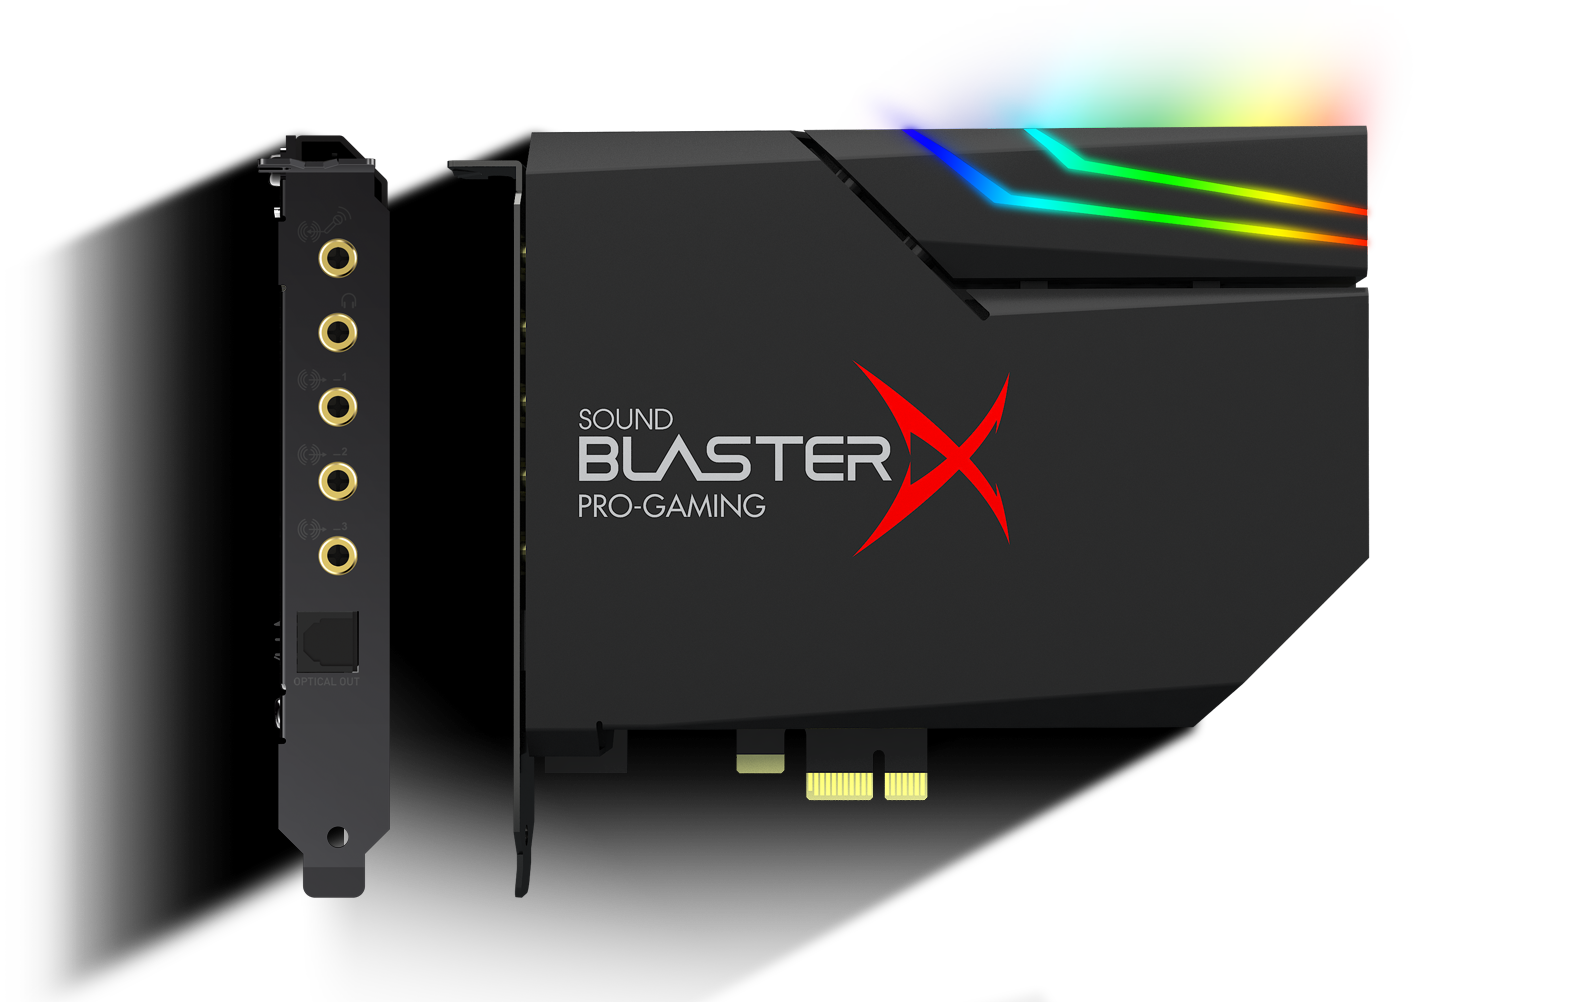 Creative Sound BlasterX AE-5 Plus SABRE32 classe Hi-res 32-bit/384 kHz PCIe Gaming Card e DAC con Dolby Digital e DTS sistema di illuminazione RGB Xamp Discrete Cuffie Bi-amp fino a 122dB SNR